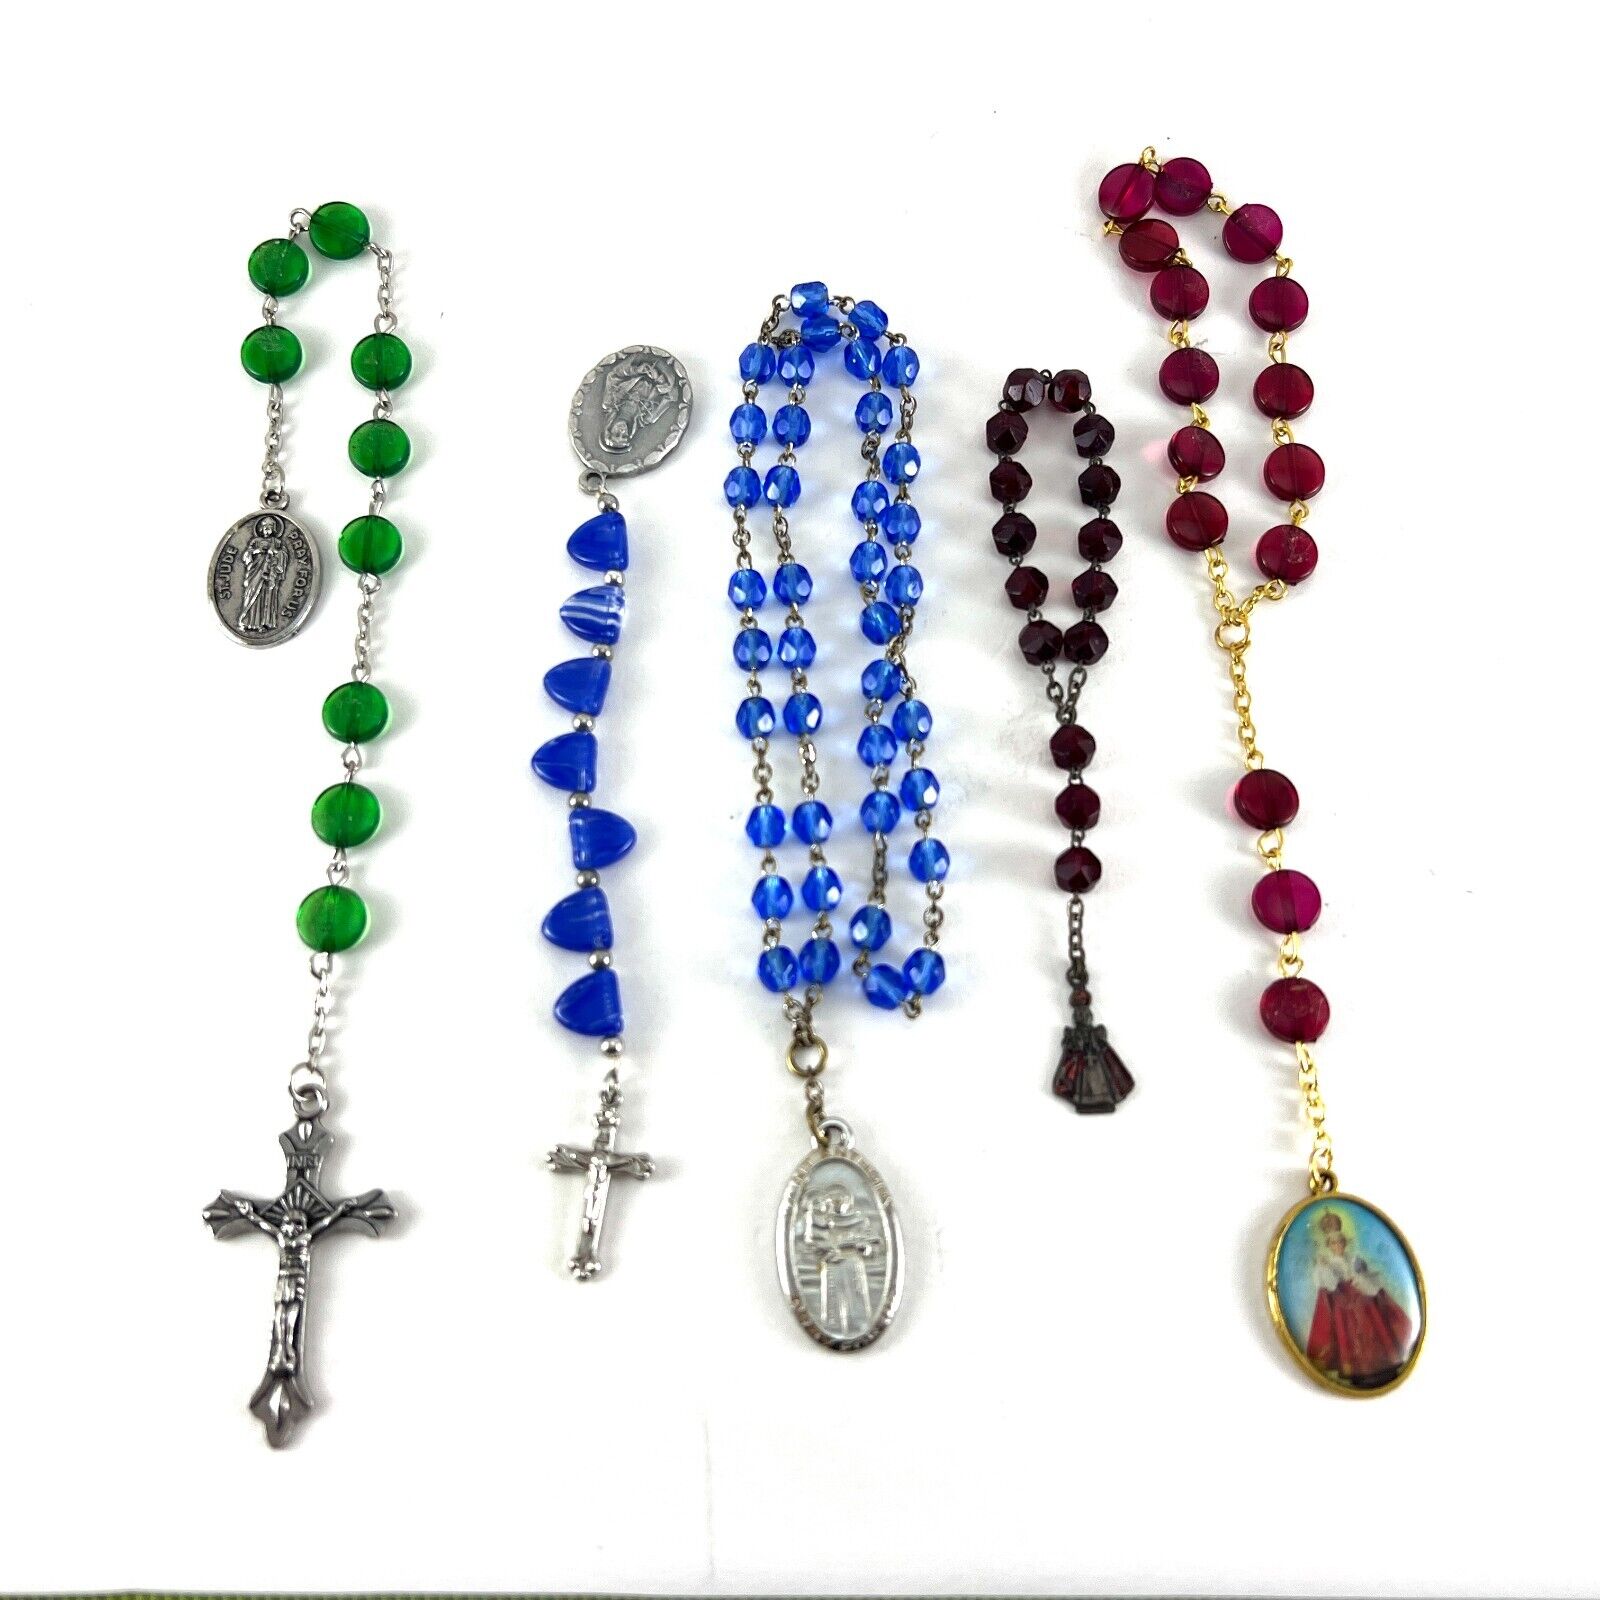 Vintage / Antique Catholic Rosary / Beads - Lot of 5 Unique Pieces